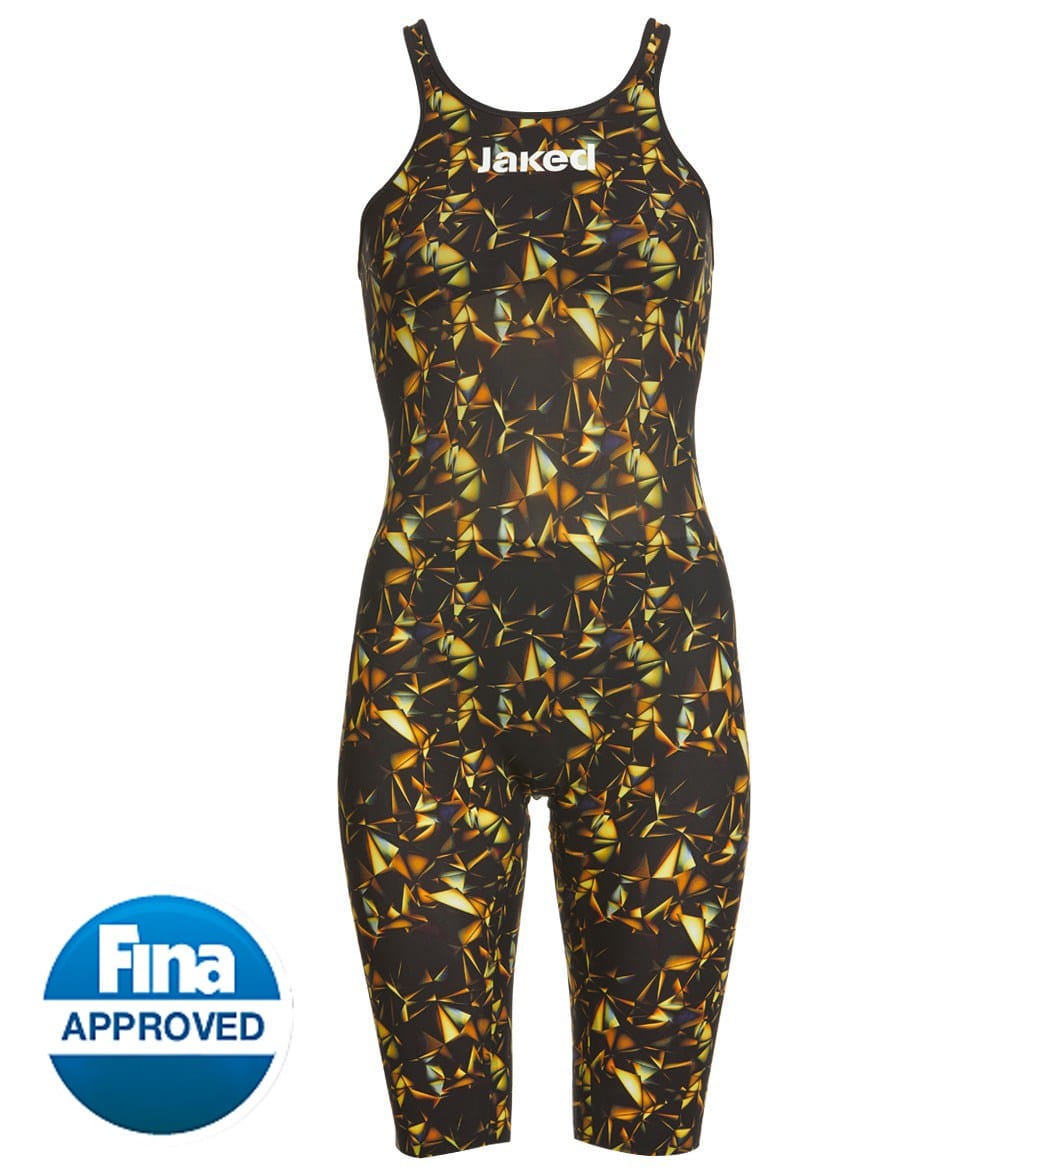 Jaked Women's Jkatana Limited Edition Open Back Kneeskin Tech Suit Swimsuit - Black/Gold 18 Elastane/Polyamide/Polyester - Swimoutlet.com